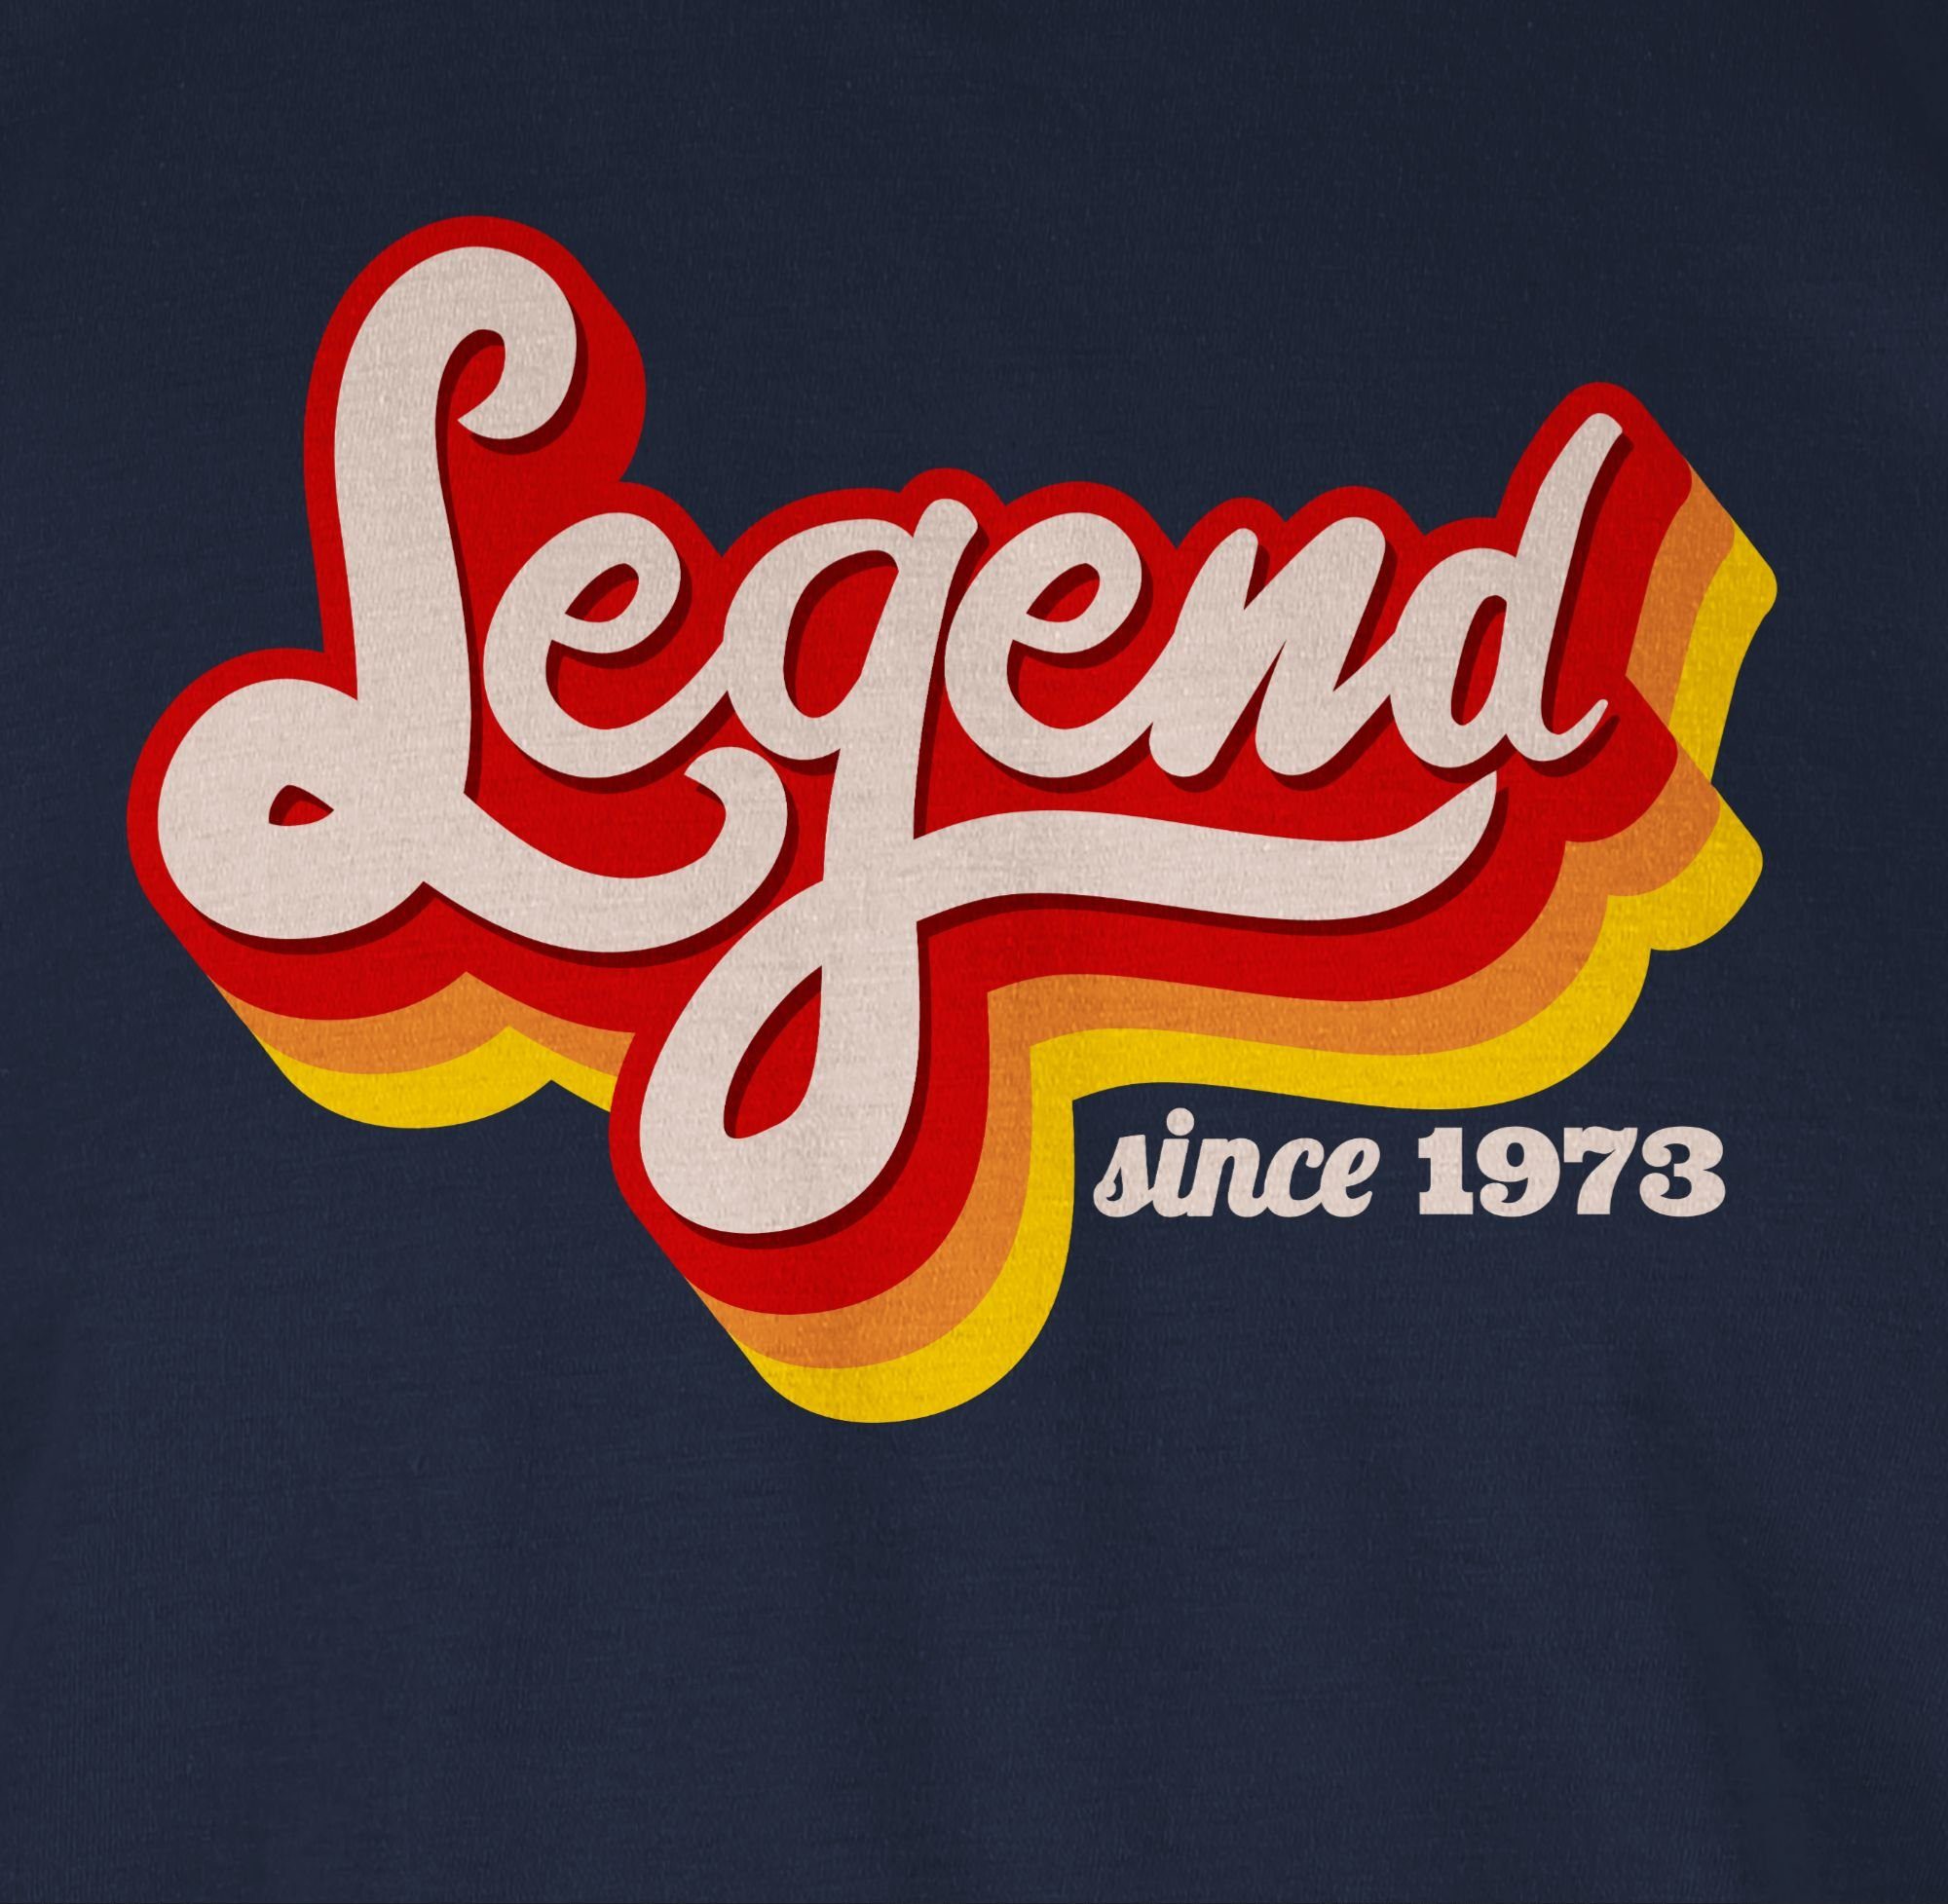 Shirtracer T-Shirt Fünfzig Blau 50. Geburtstag Legend Navy Retro 1973 1 since